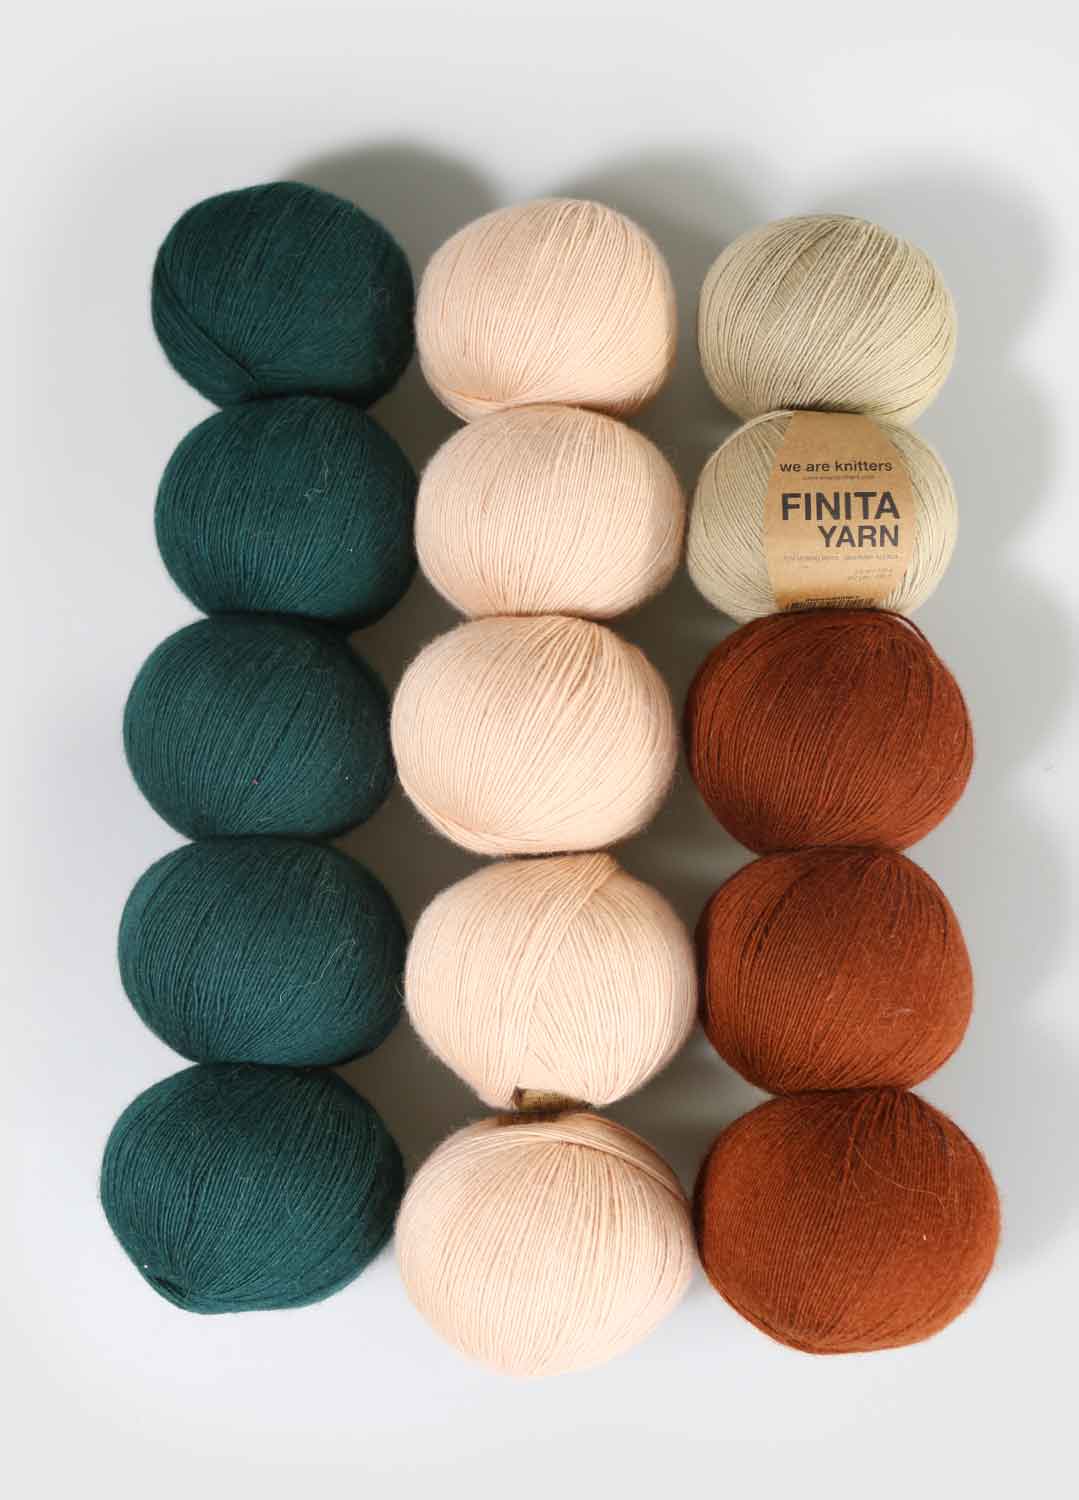 15 Pack of Finita Yarn Balls